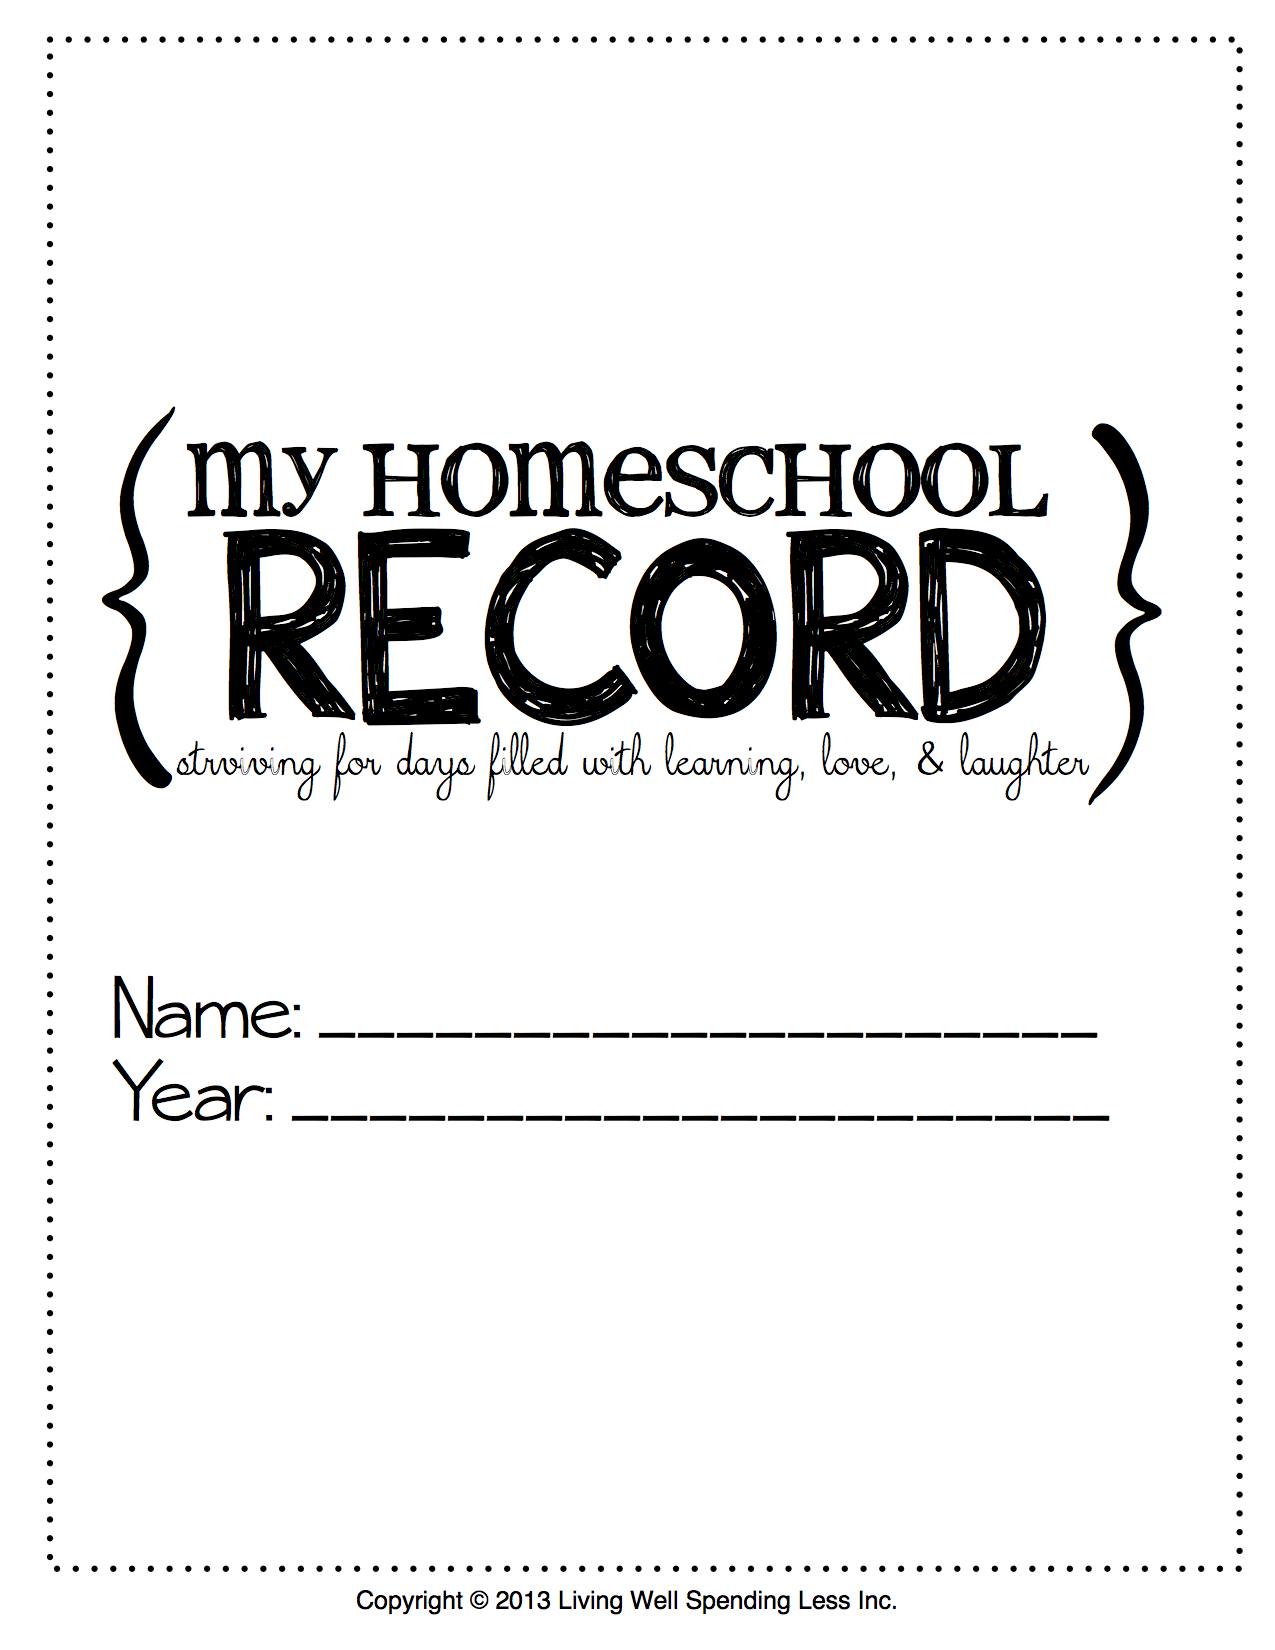 homeschool-planner-homeschool-portfolio-teaching-homeschool